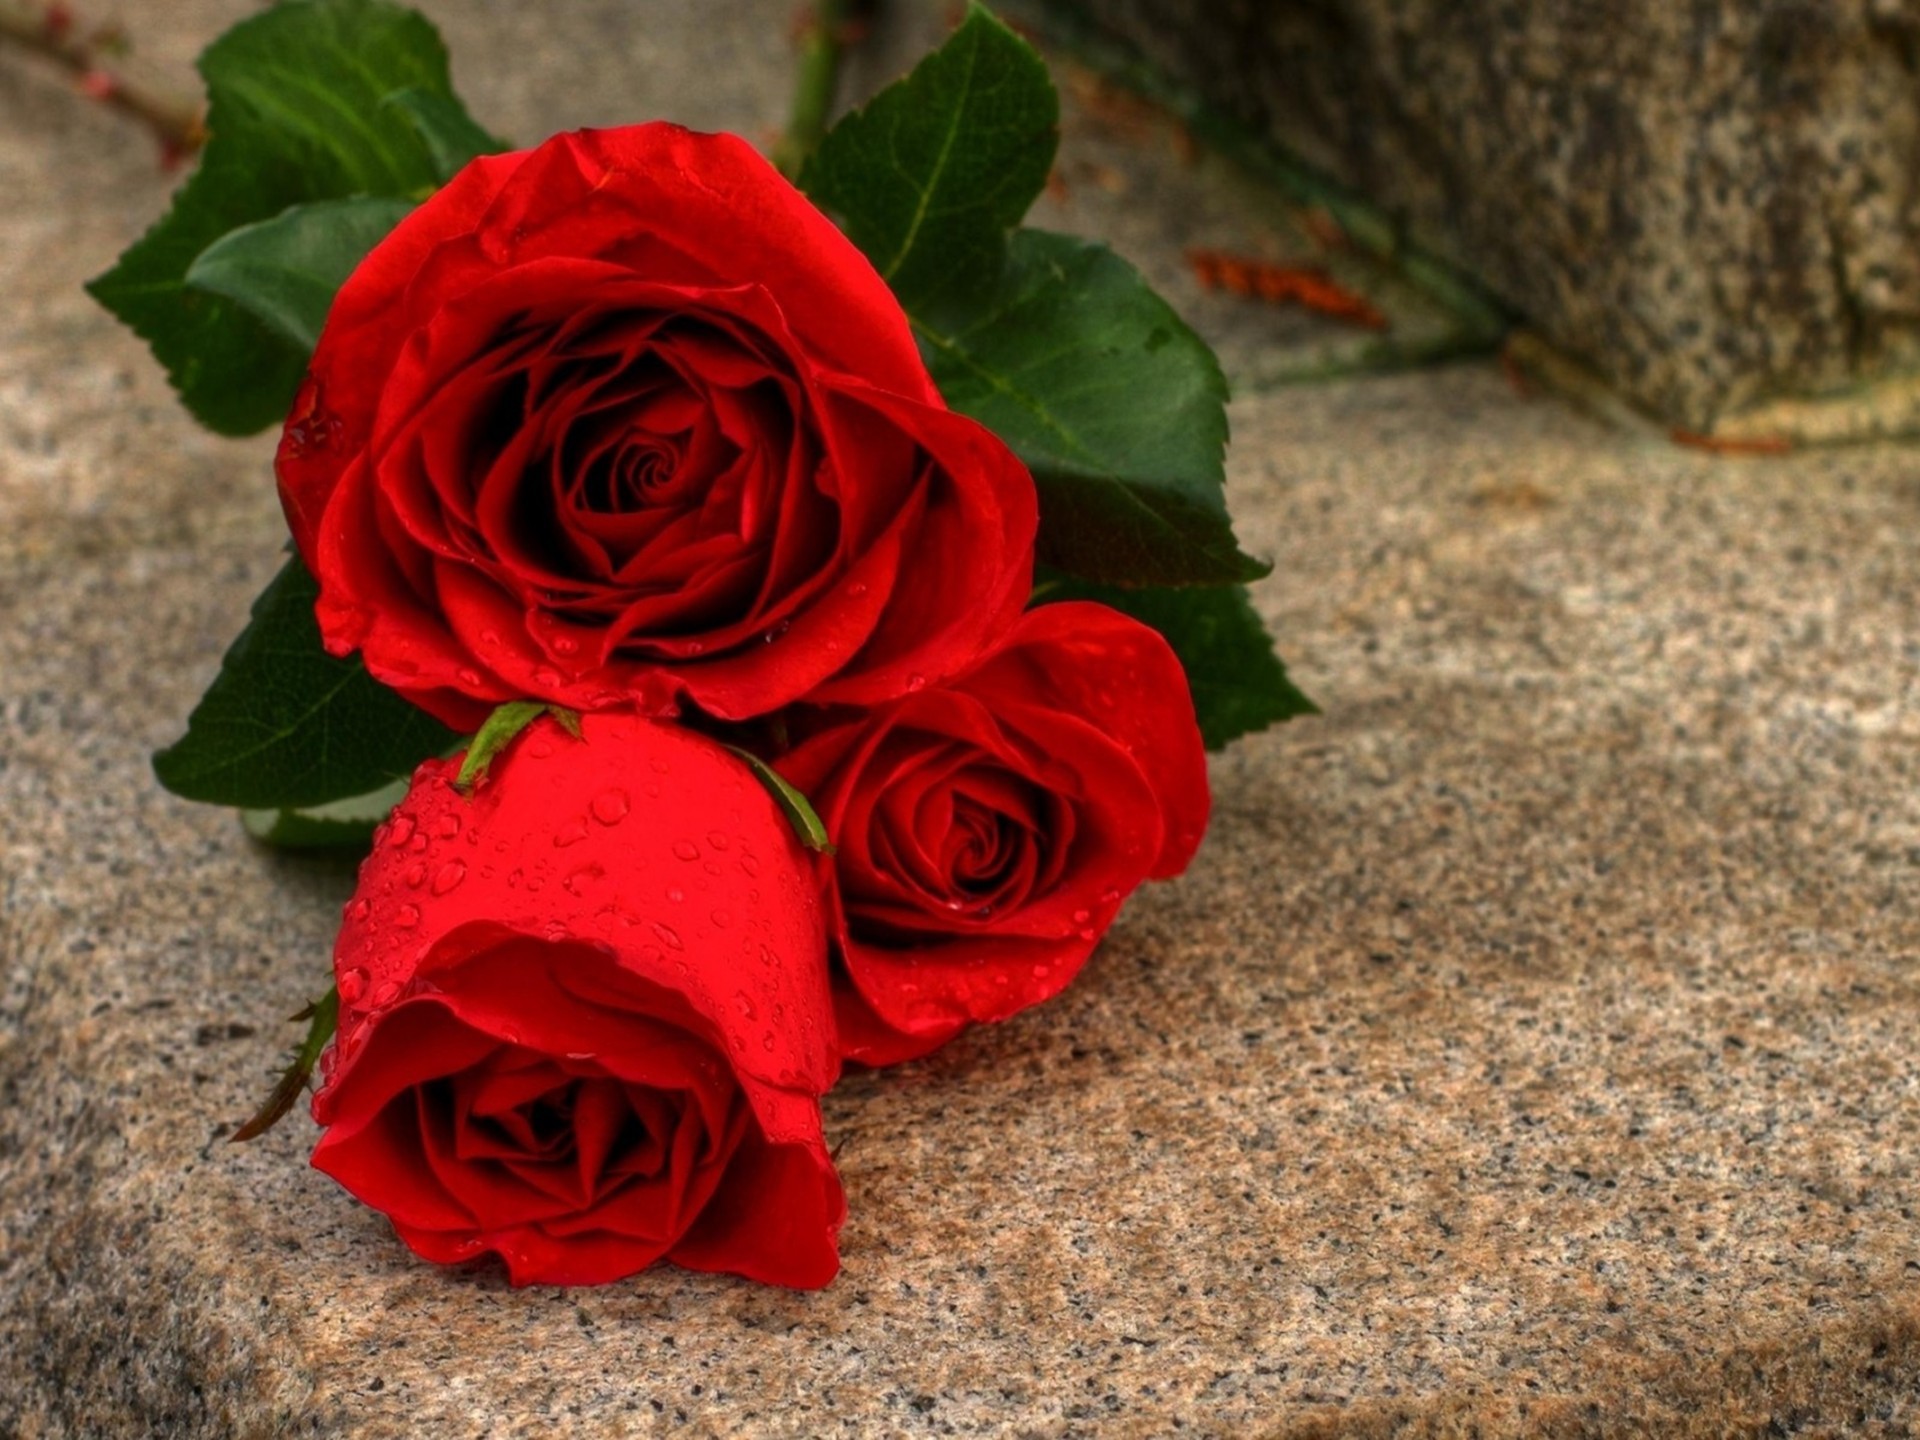 rose flower wallpaper hd free download,flower,garden roses,red,rose,petal